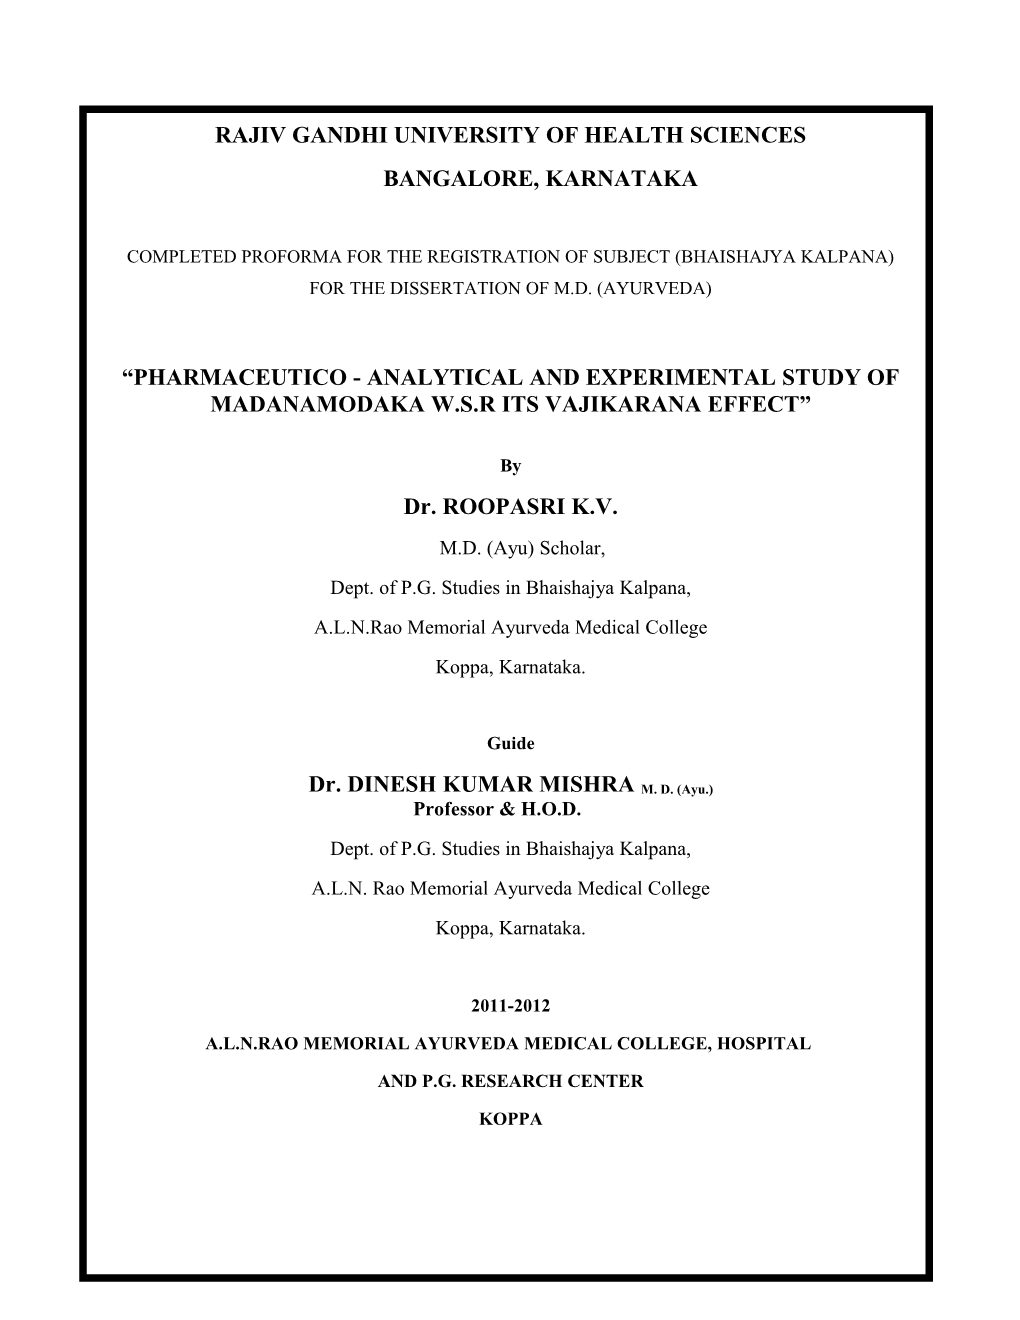 Pharmaceutico - Analytical and Experimental Study of Madanamodaka W.S.R Itsvajikarana Effect